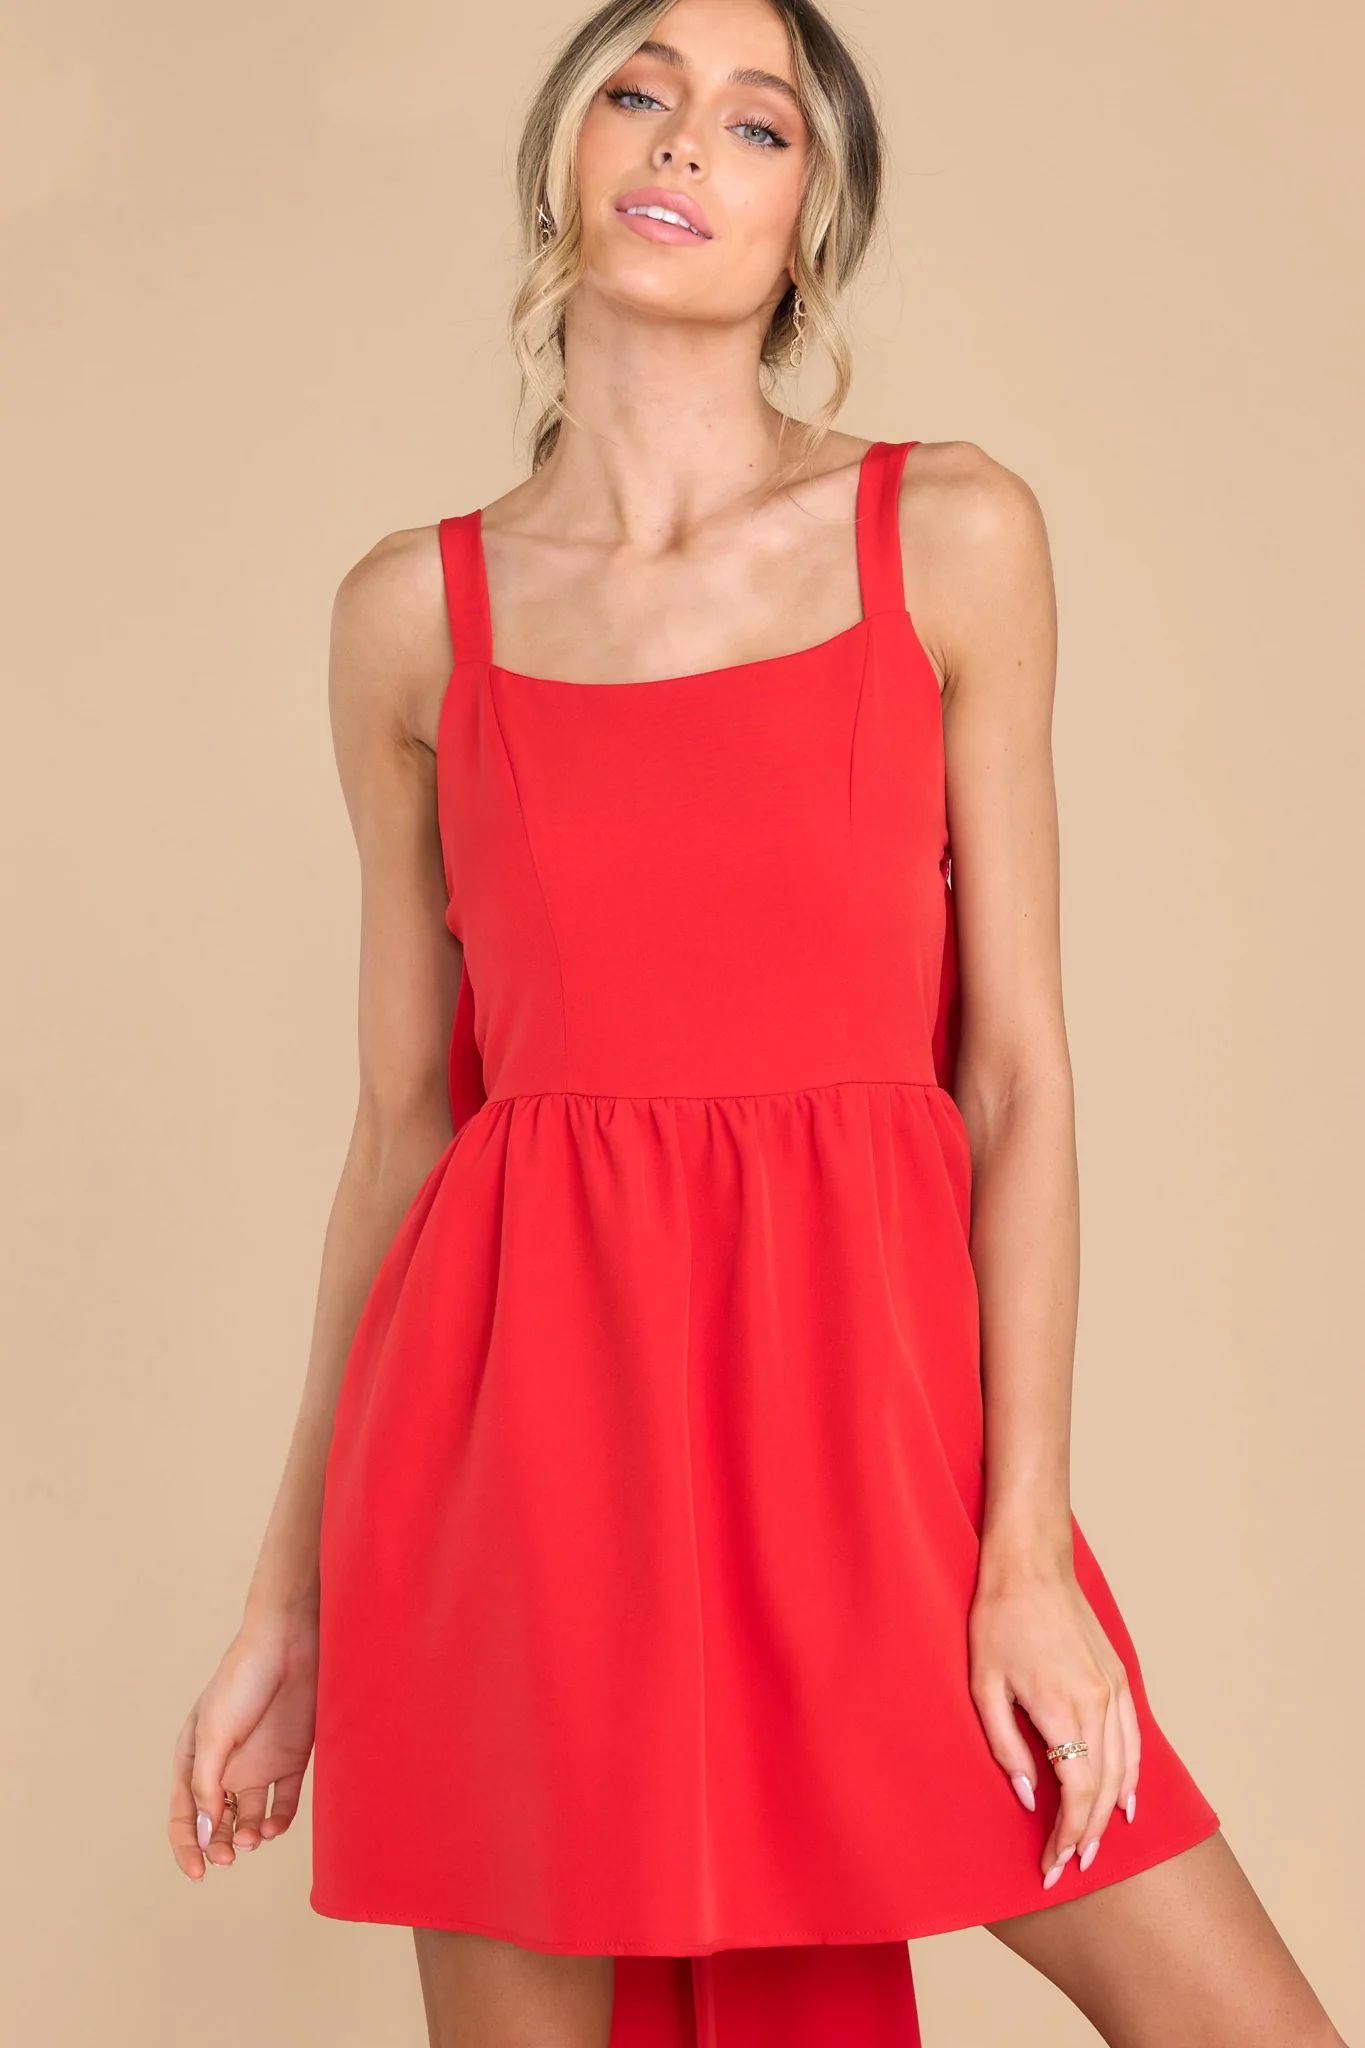 Elegant Essence Red Dress | Red Dress 